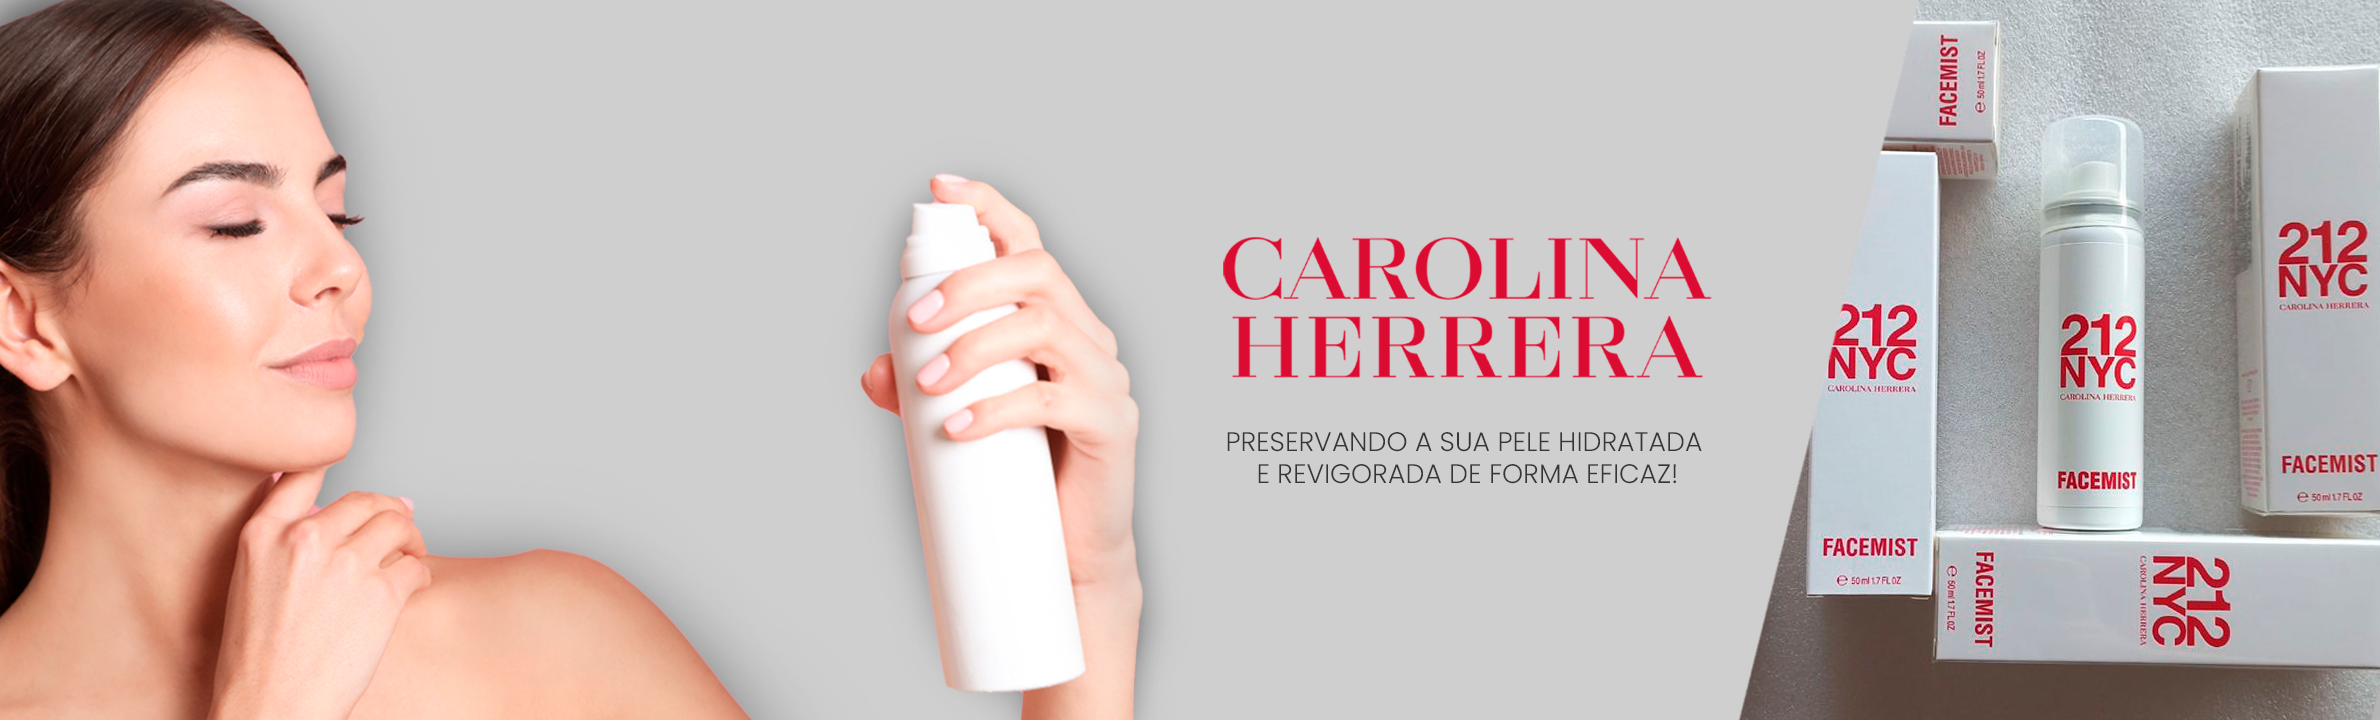 Lançamento | Facemist Carolina Herrera